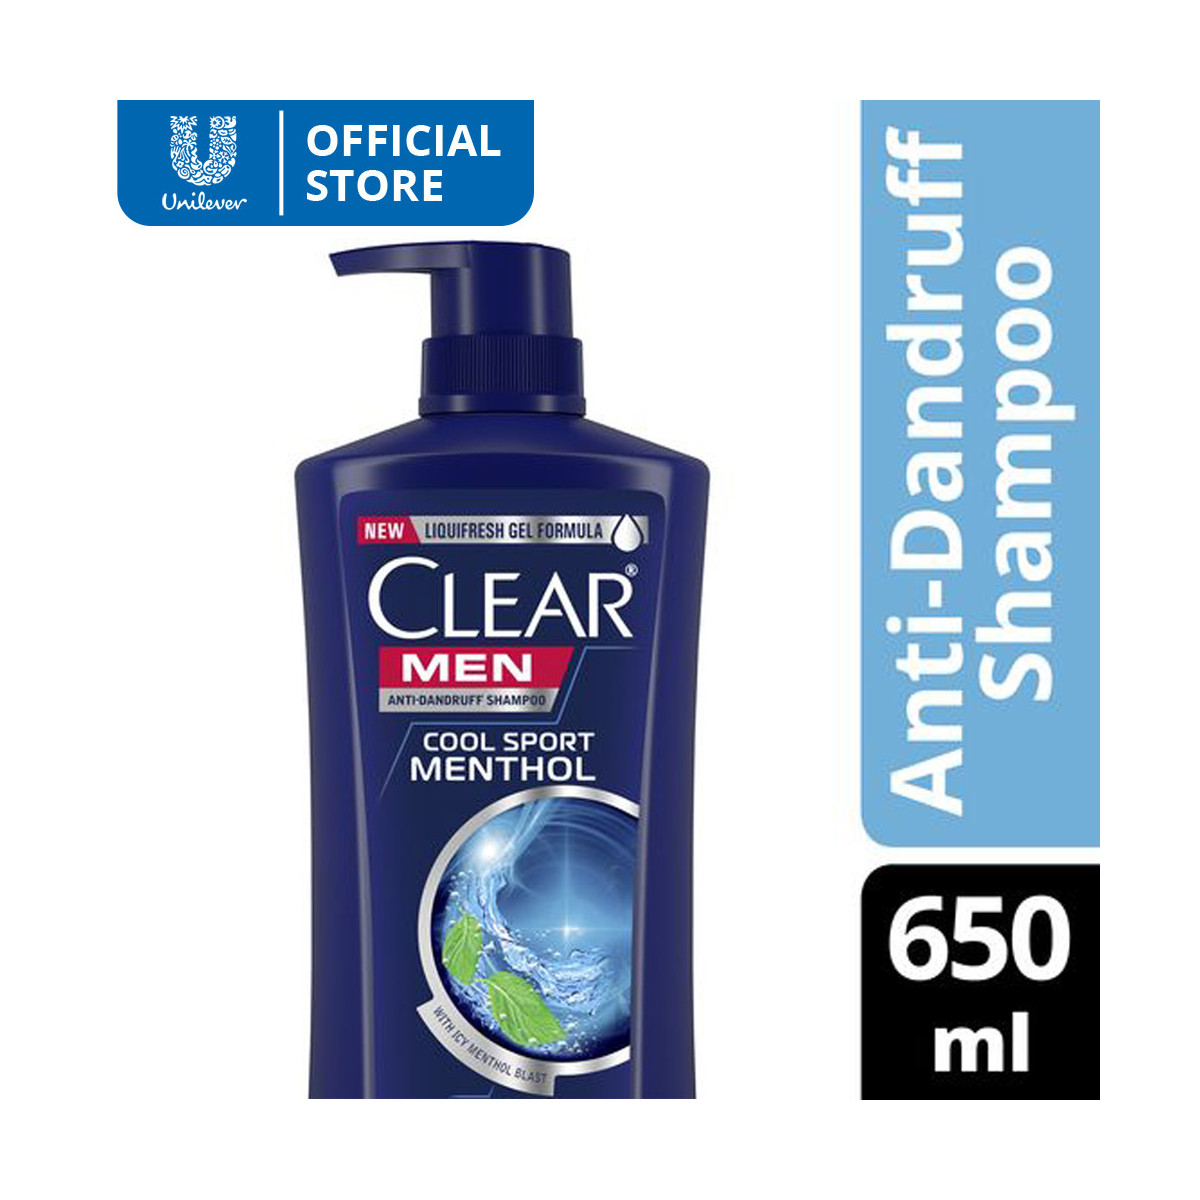 Clear Men Anti Dandruff Shampoo Cool Sport Menthol 650ml